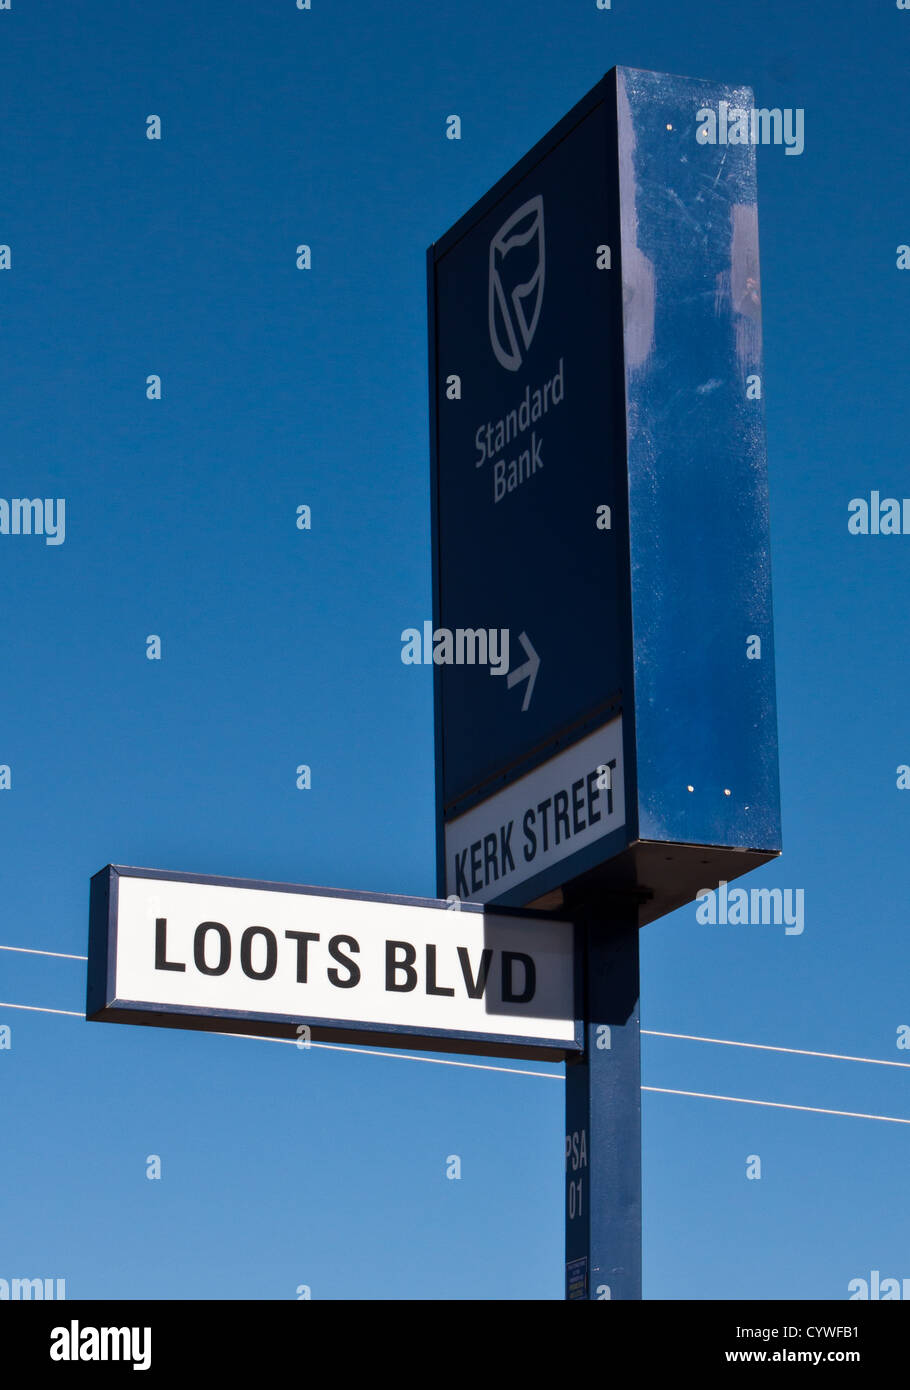 Street Names in Prieska, South Africa. Stock Photo